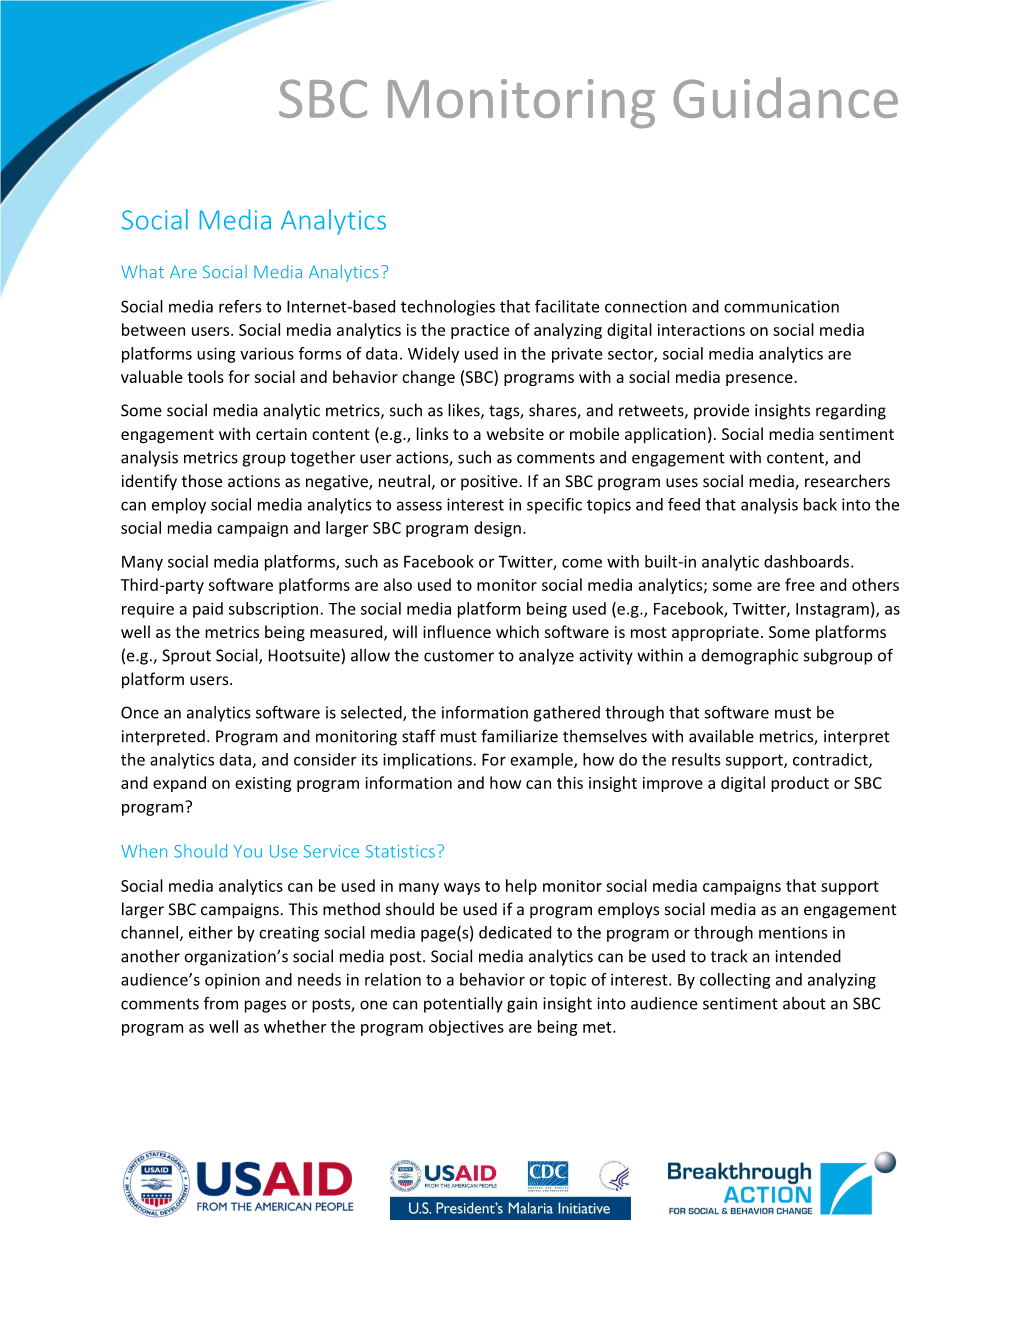 SBC Monitoring Guidance: Social Media Analytics | 2